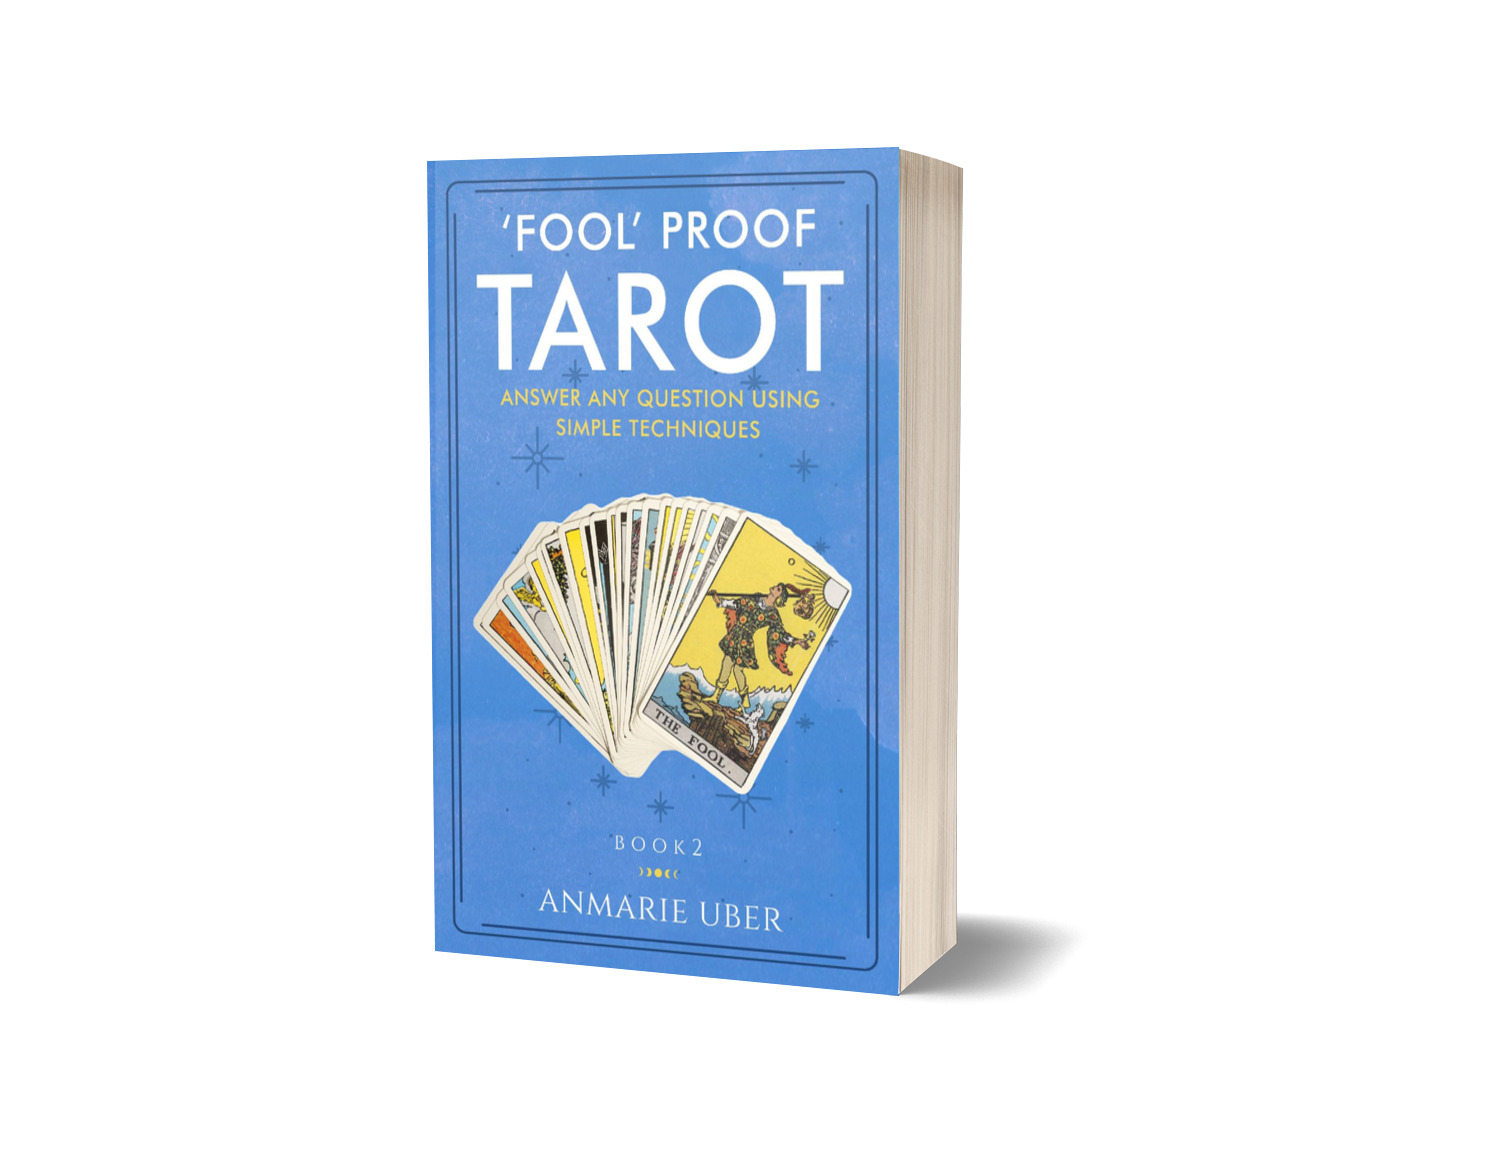 Signed Print "Fool' Proof Tarot"